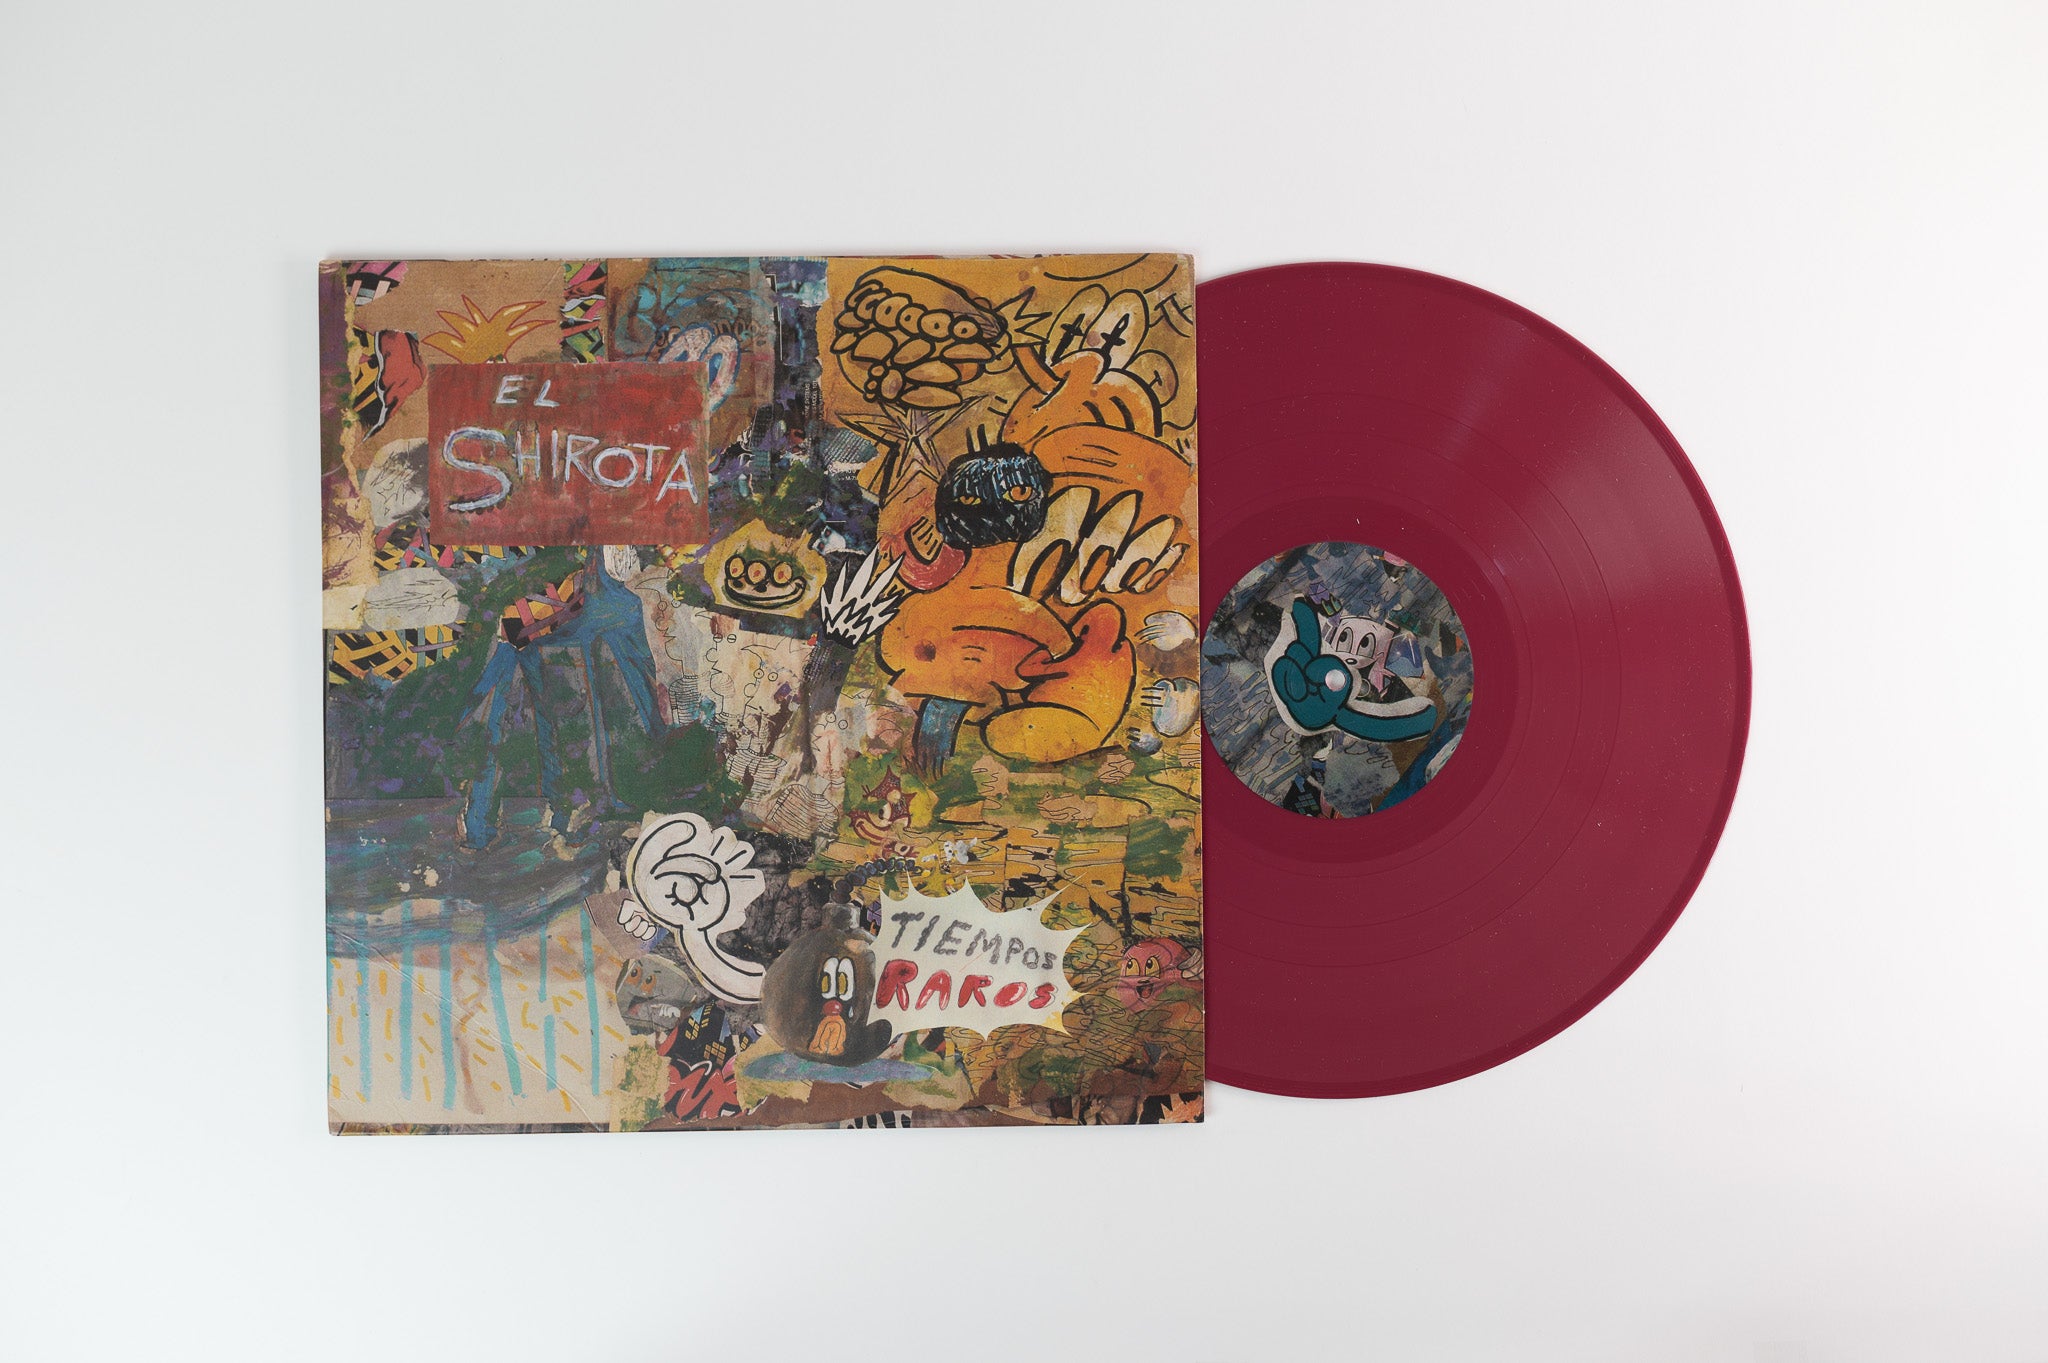 El Shirota - Tiempos Raros on Devil In The Woods - Burgundy Colored Vinyl